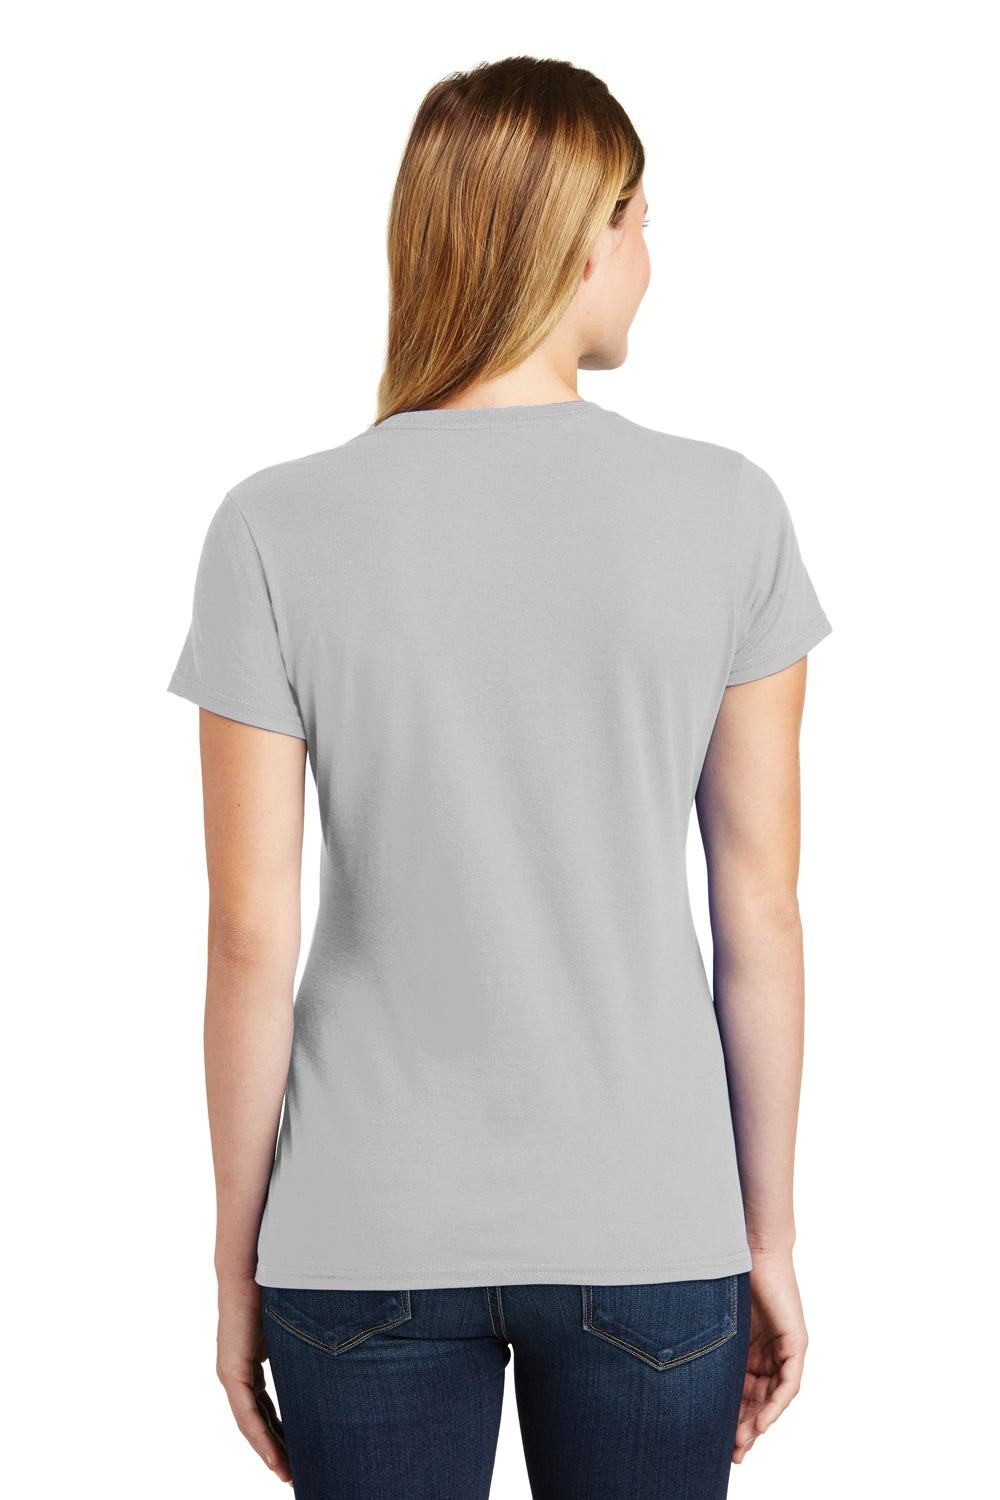 Port & Company LPC450 Womens Fan Favorite Short Sleeve Crewneck T-Shirt Silver Grey Back